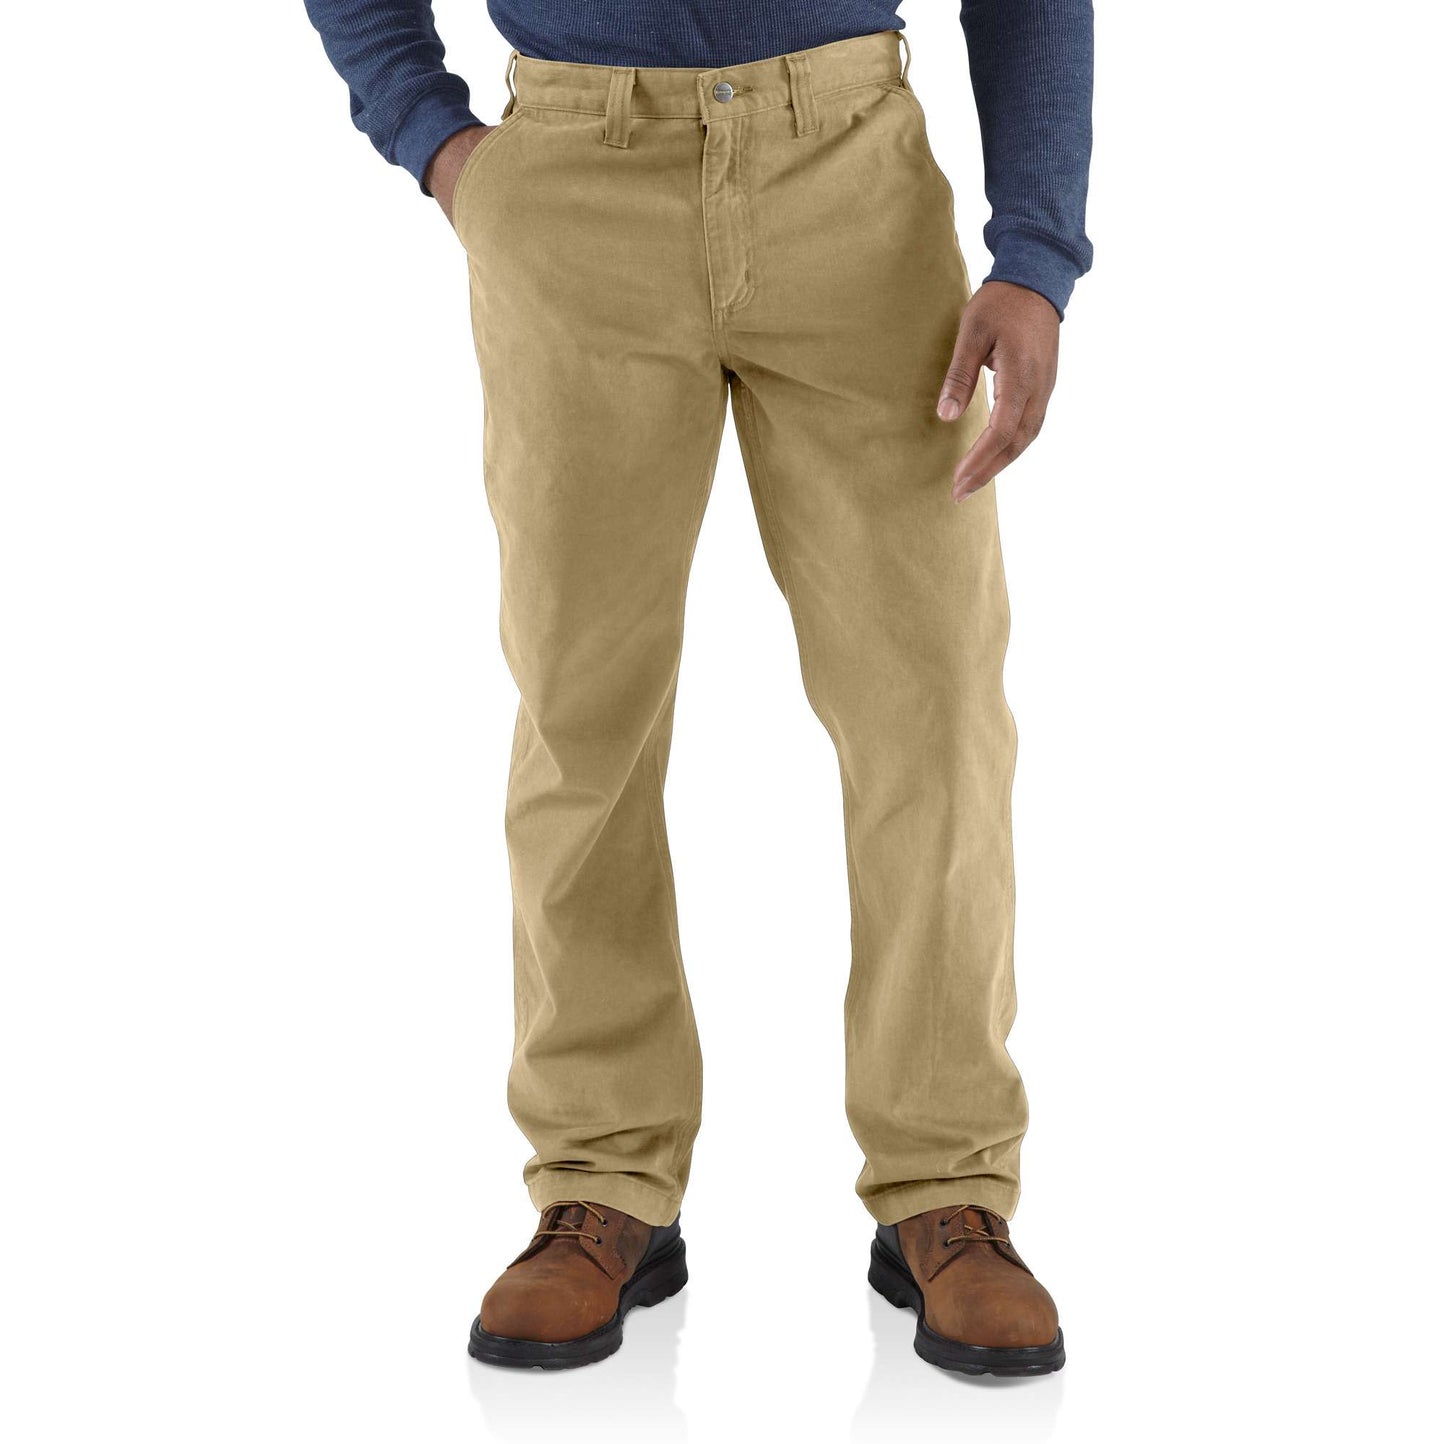 Carhartt Men's Rugged Work Pants - Field Khaki